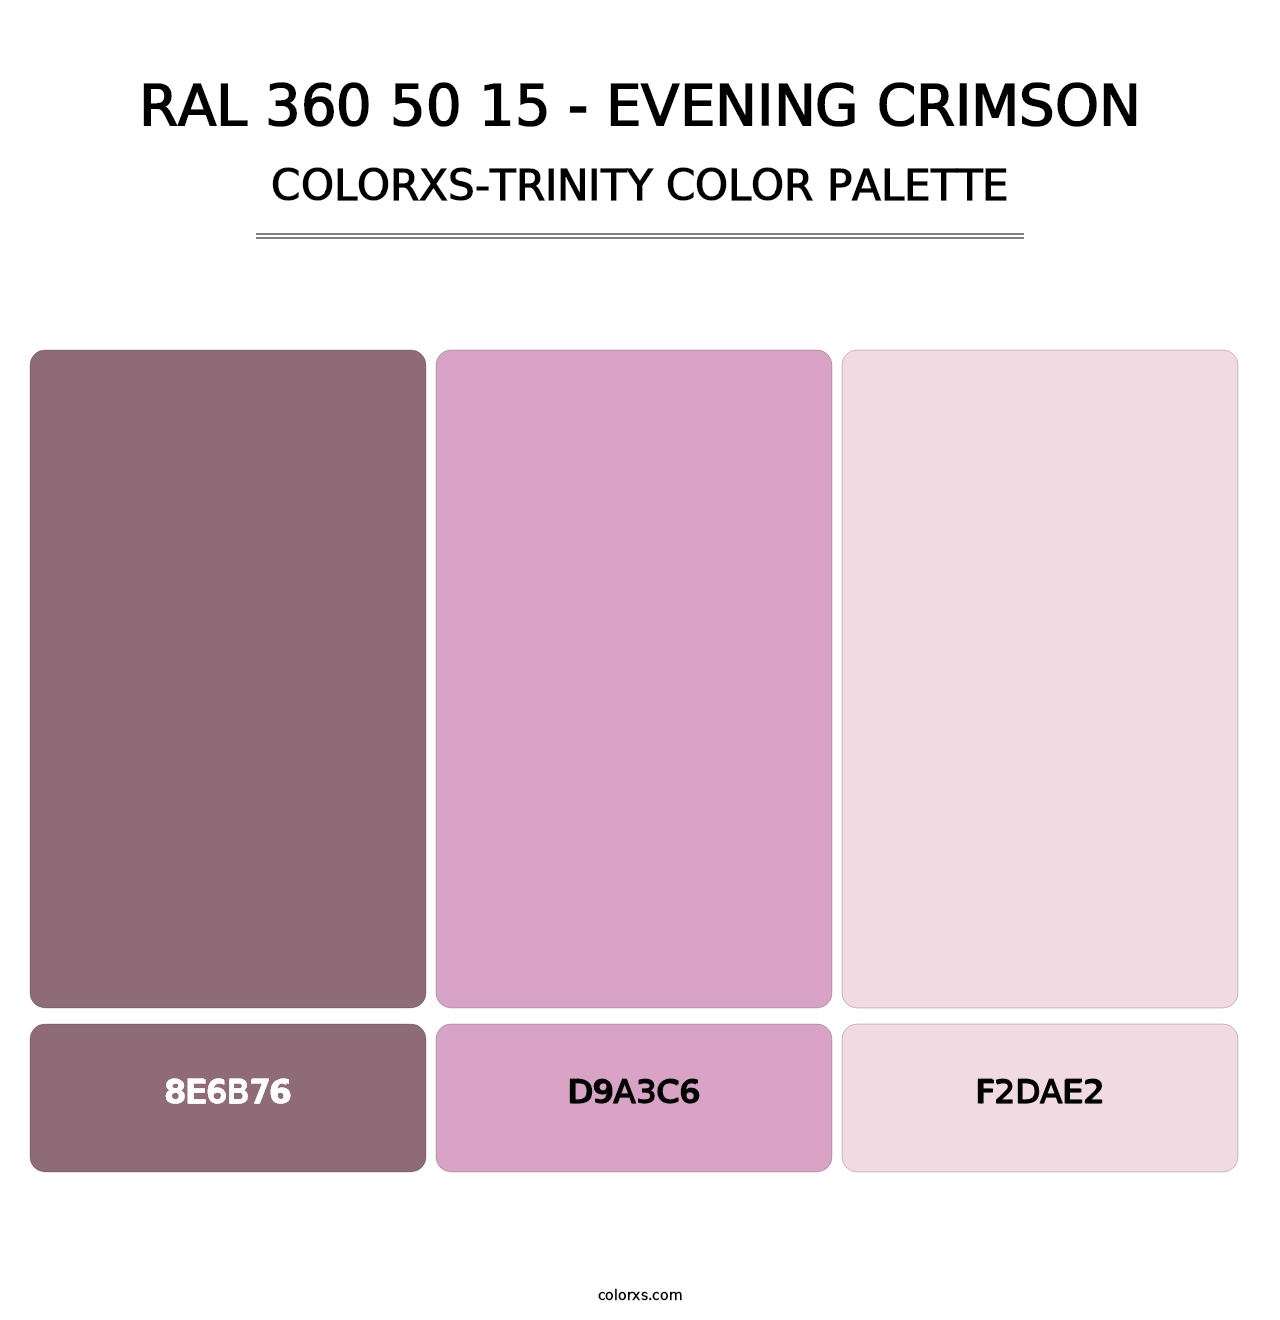 RAL 360 50 15 - Evening Crimson - Colorxs Trinity Palette